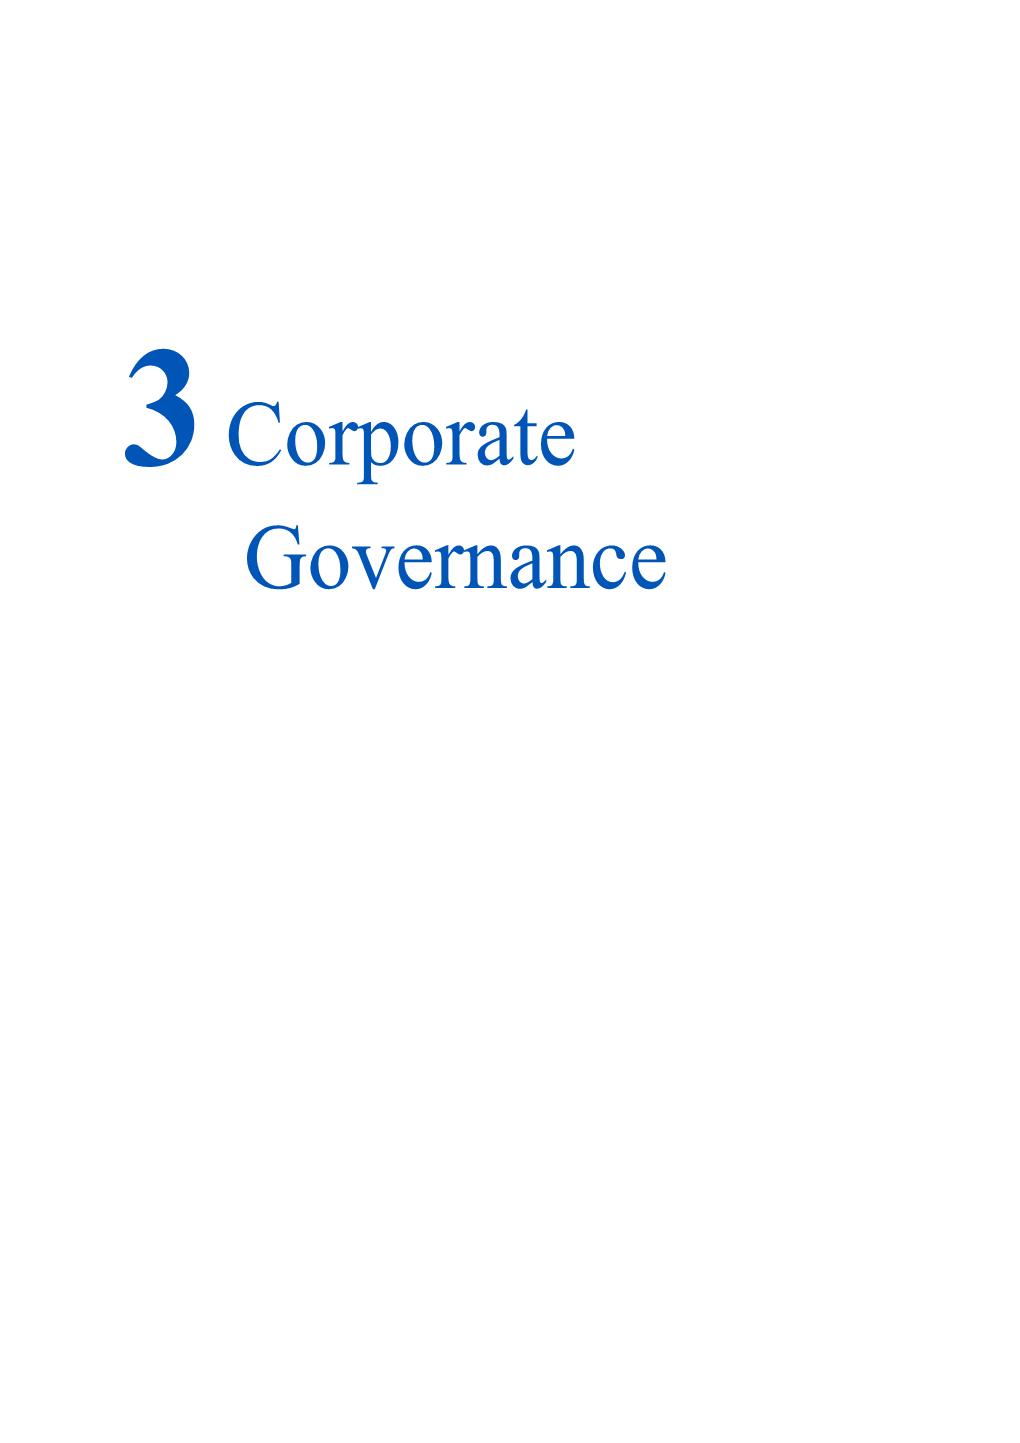 3 Corporate Governance